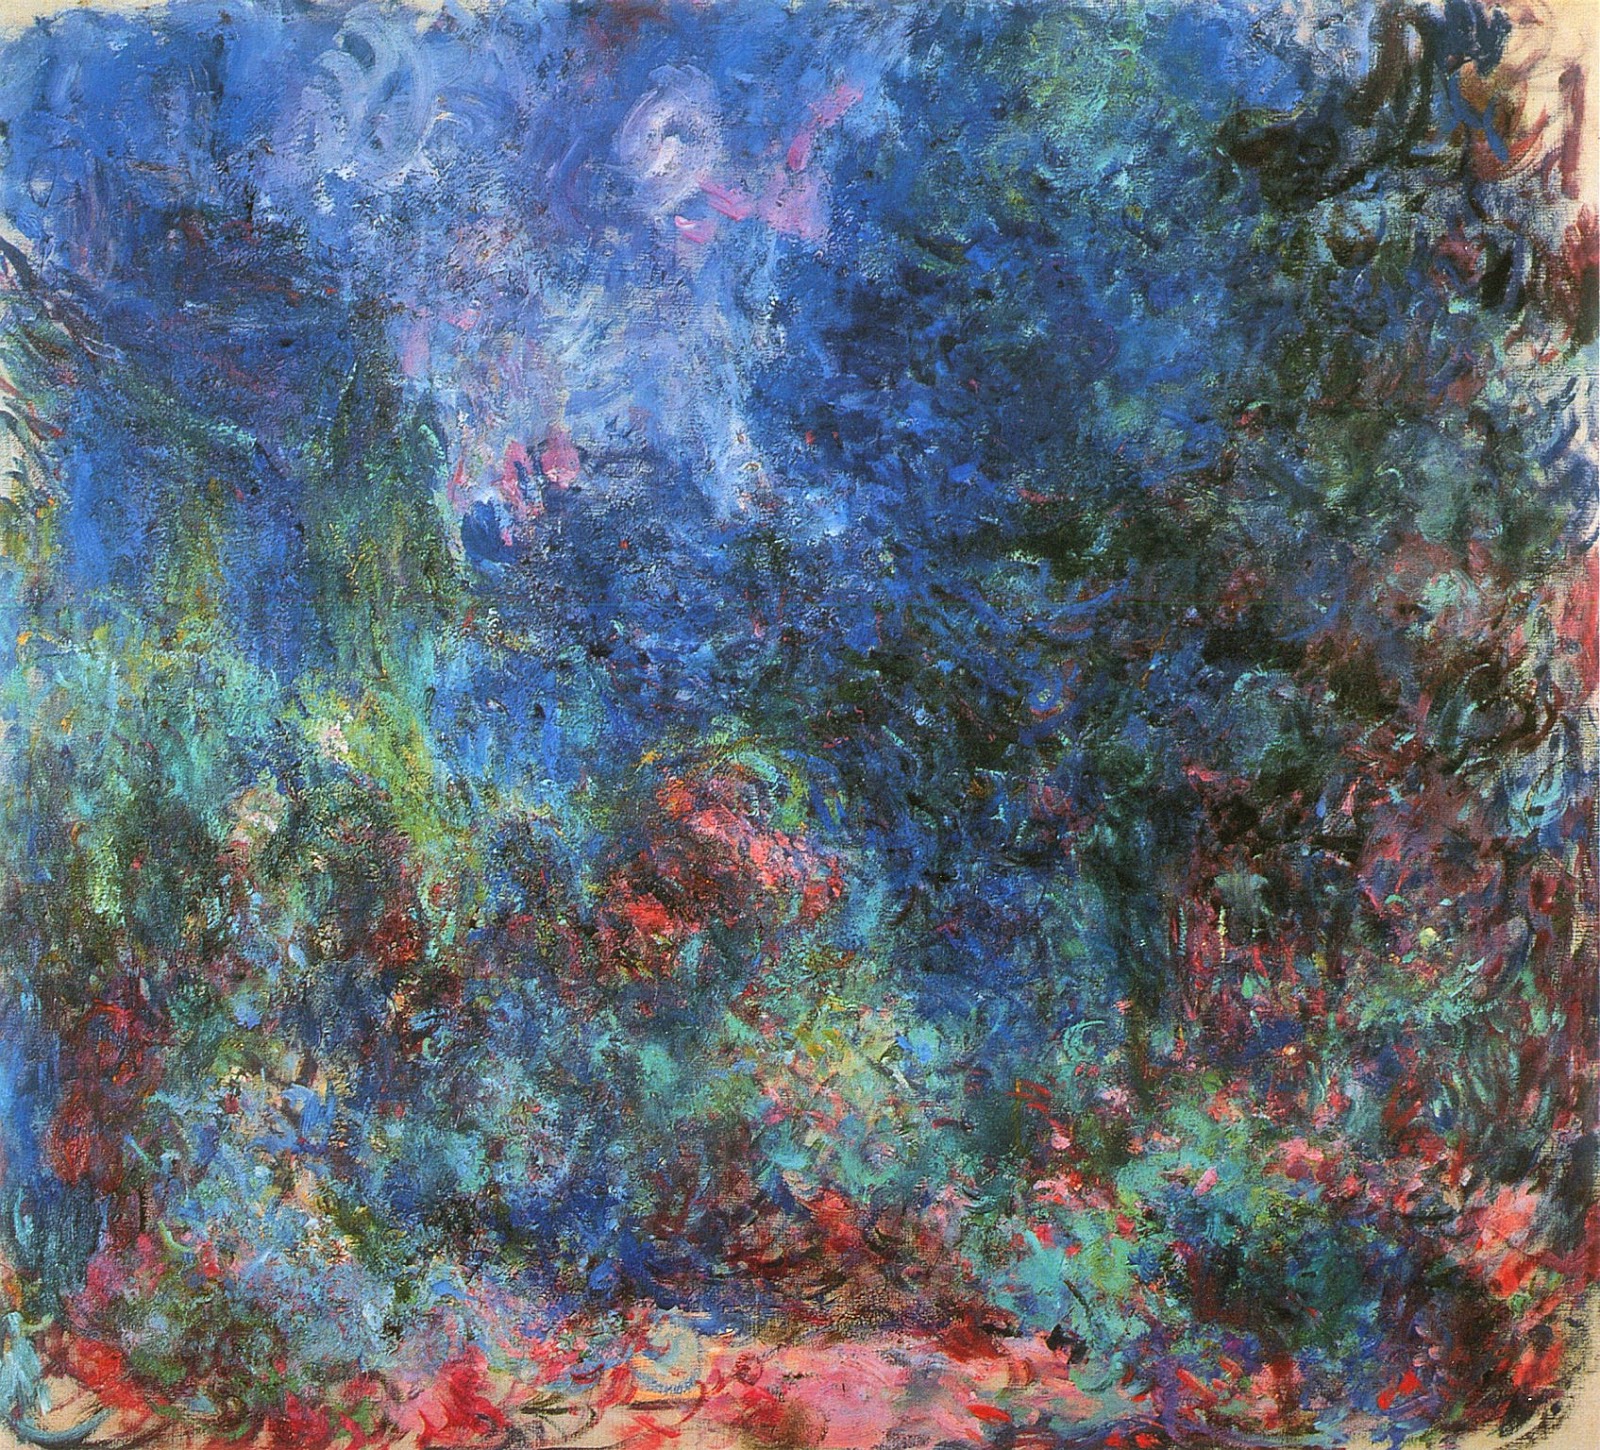 Claude+Monet-1840-1926 (754).jpg